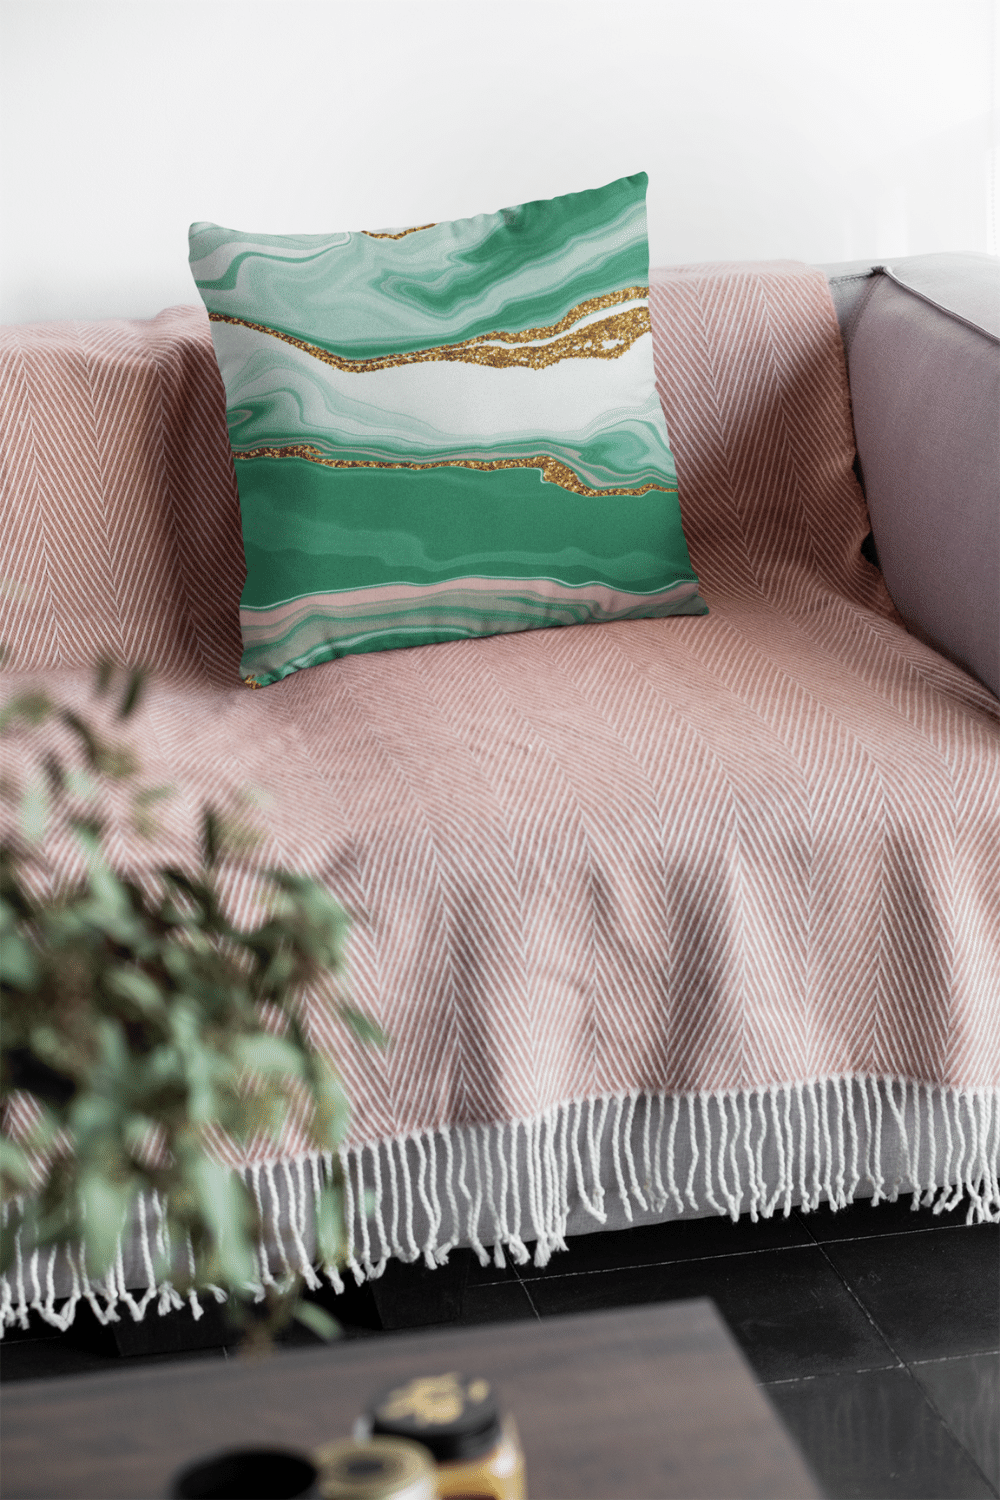 Pillows - Dorm Room Pillow - Green & Gold Marble